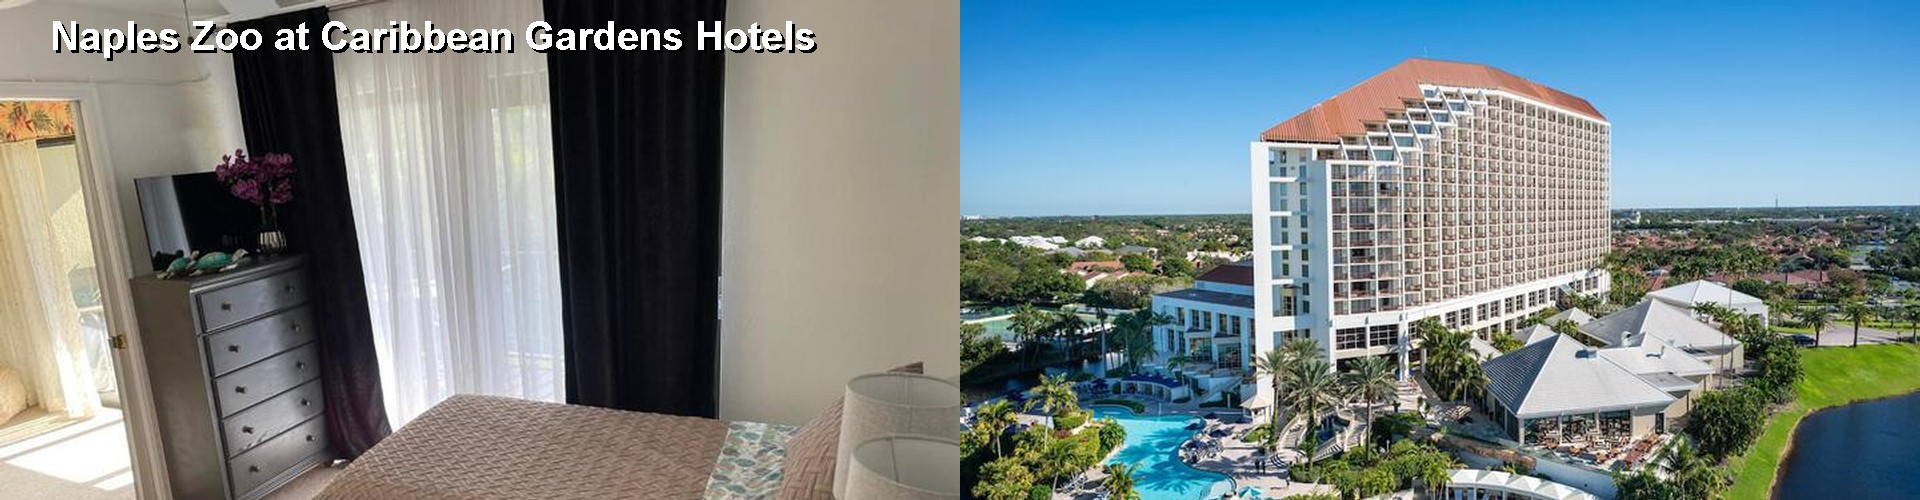 5 Best Hotels near Naples Zoo at Caribbean Gardens